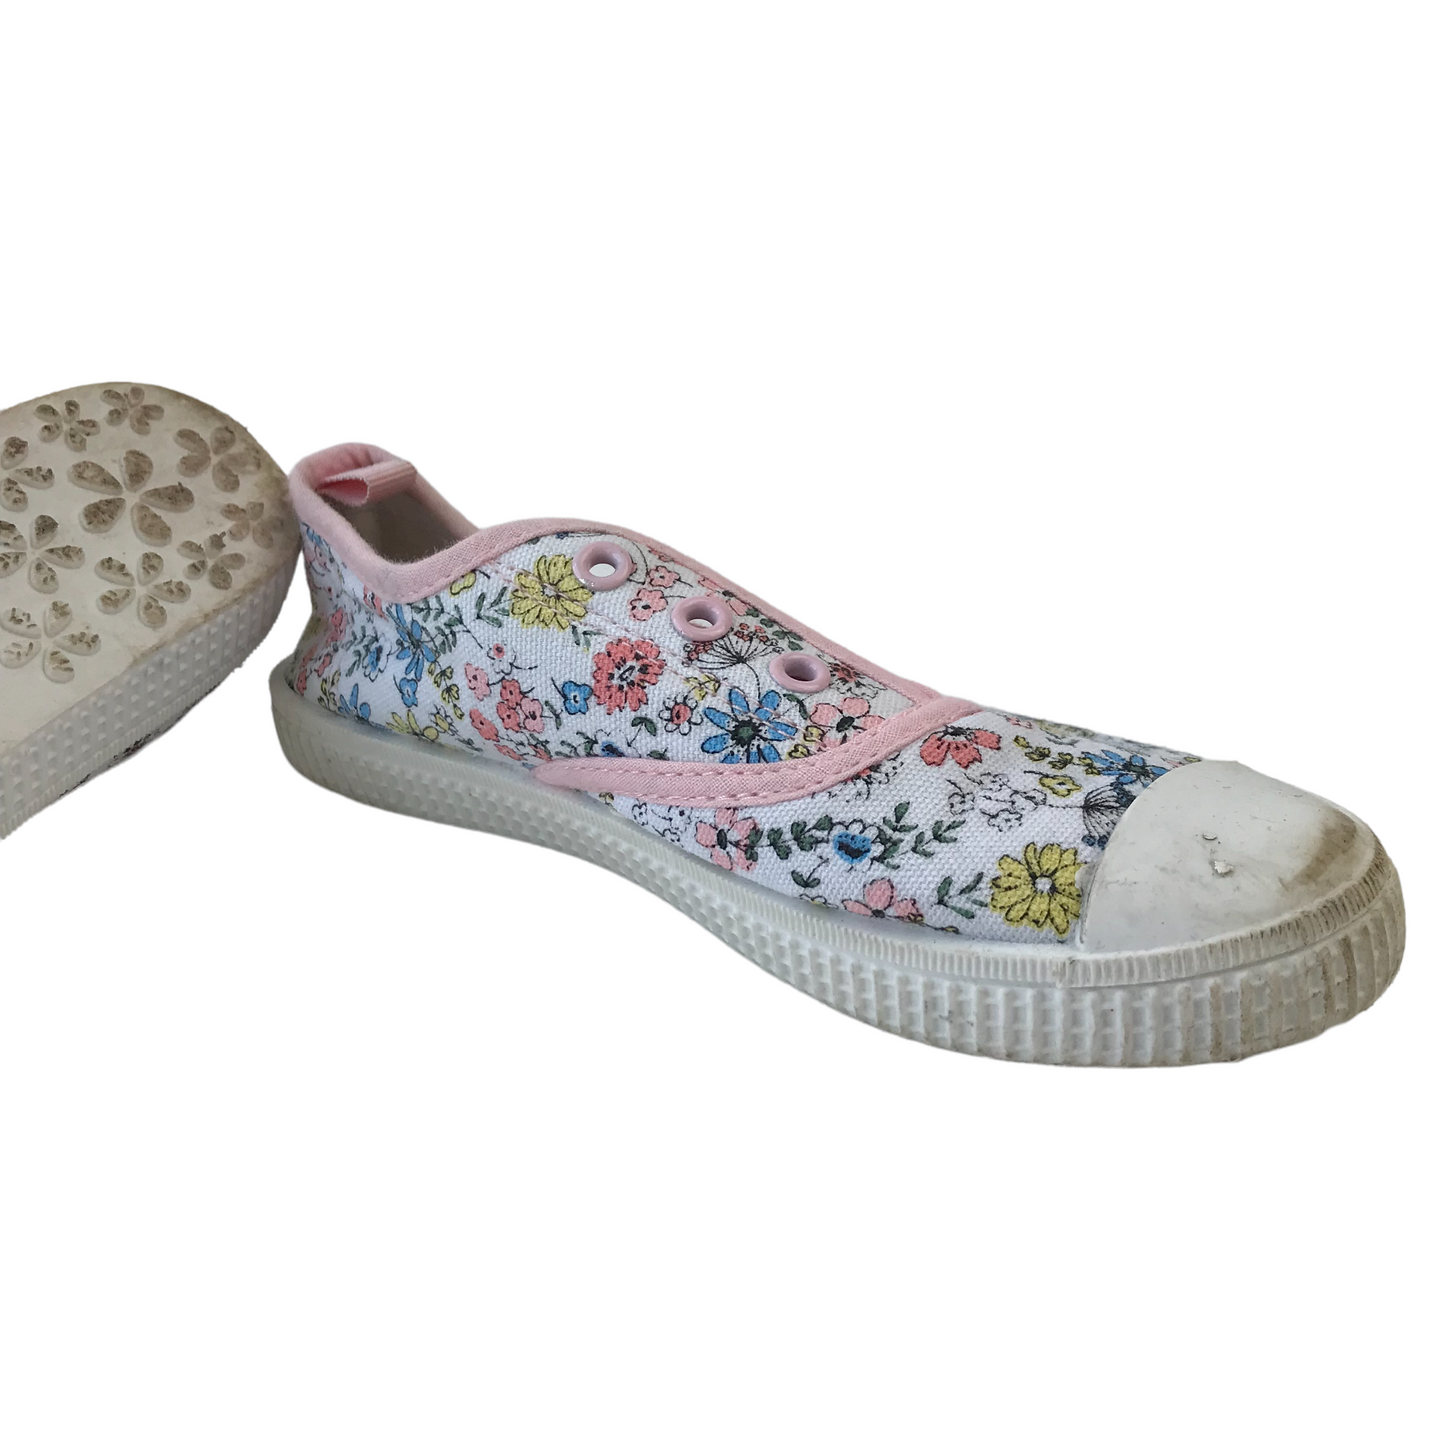 Primark Floral Plimsoll-style Trainers Shoe Size 11 (jr)